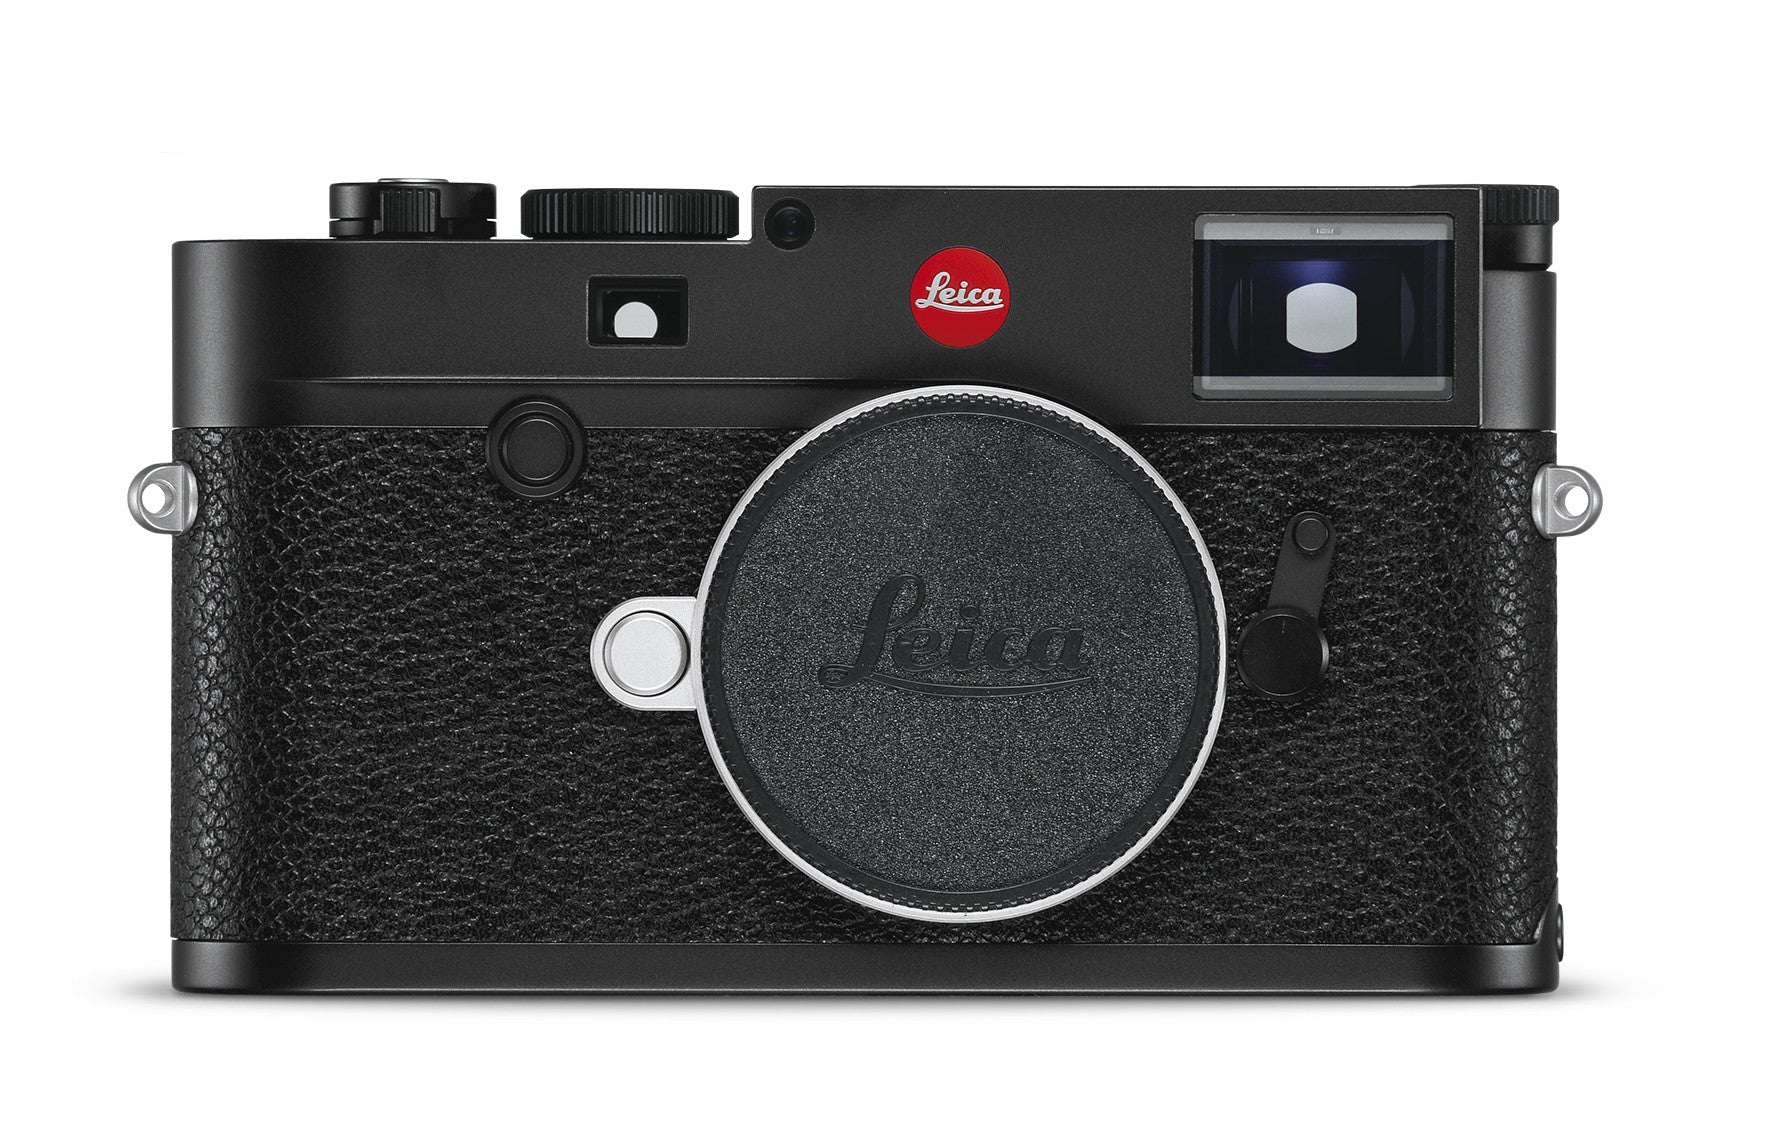 Leica M10 Digital Camera (Black), camera mirrorless cameras, Leica - Pictureline  - 1